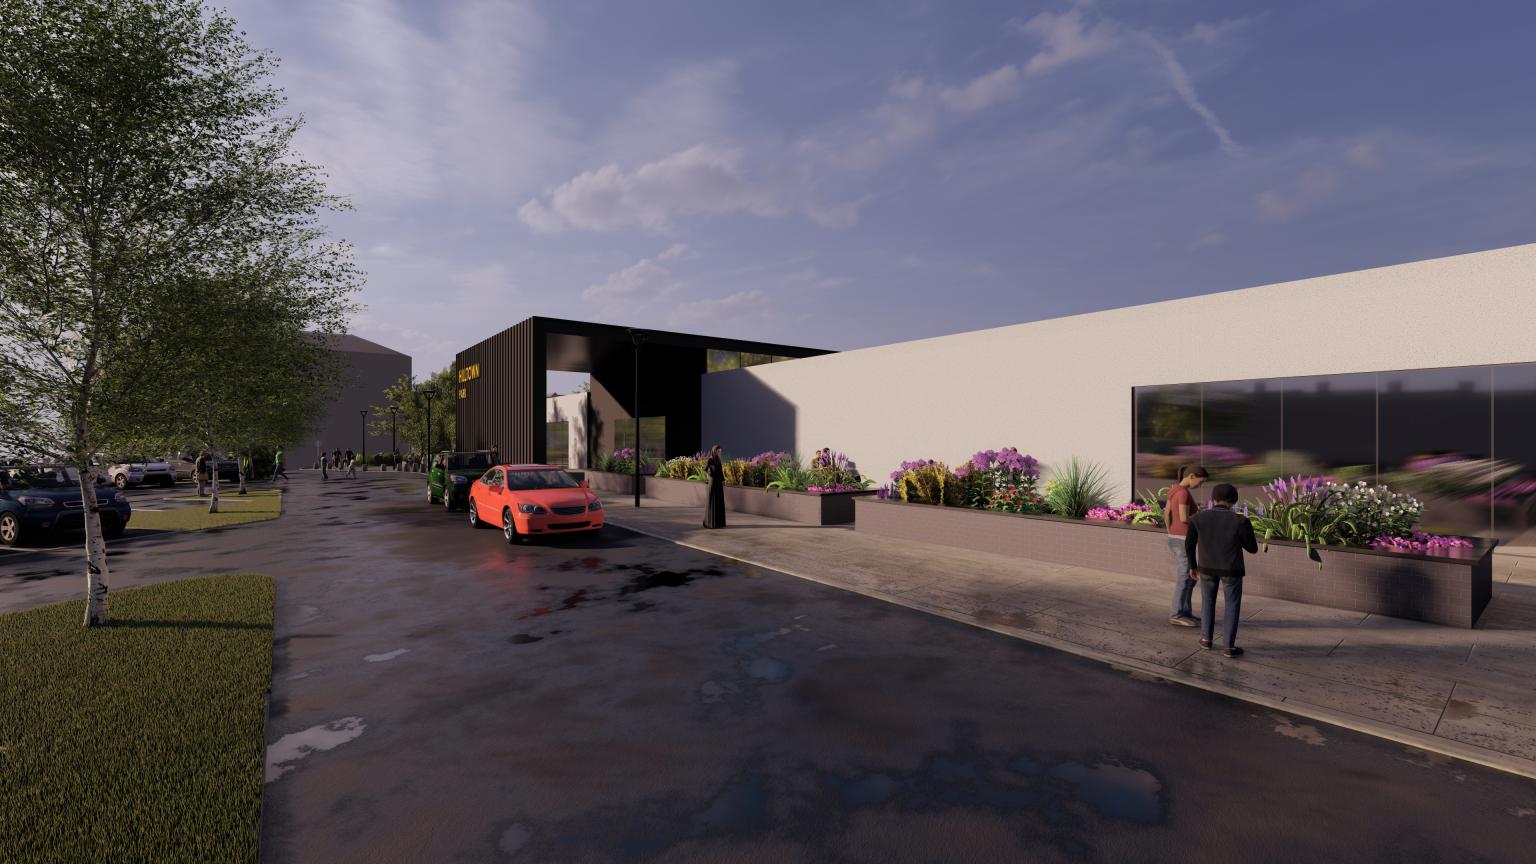 In Pictures: Brunton Design unveils Dundee leisure park proposal